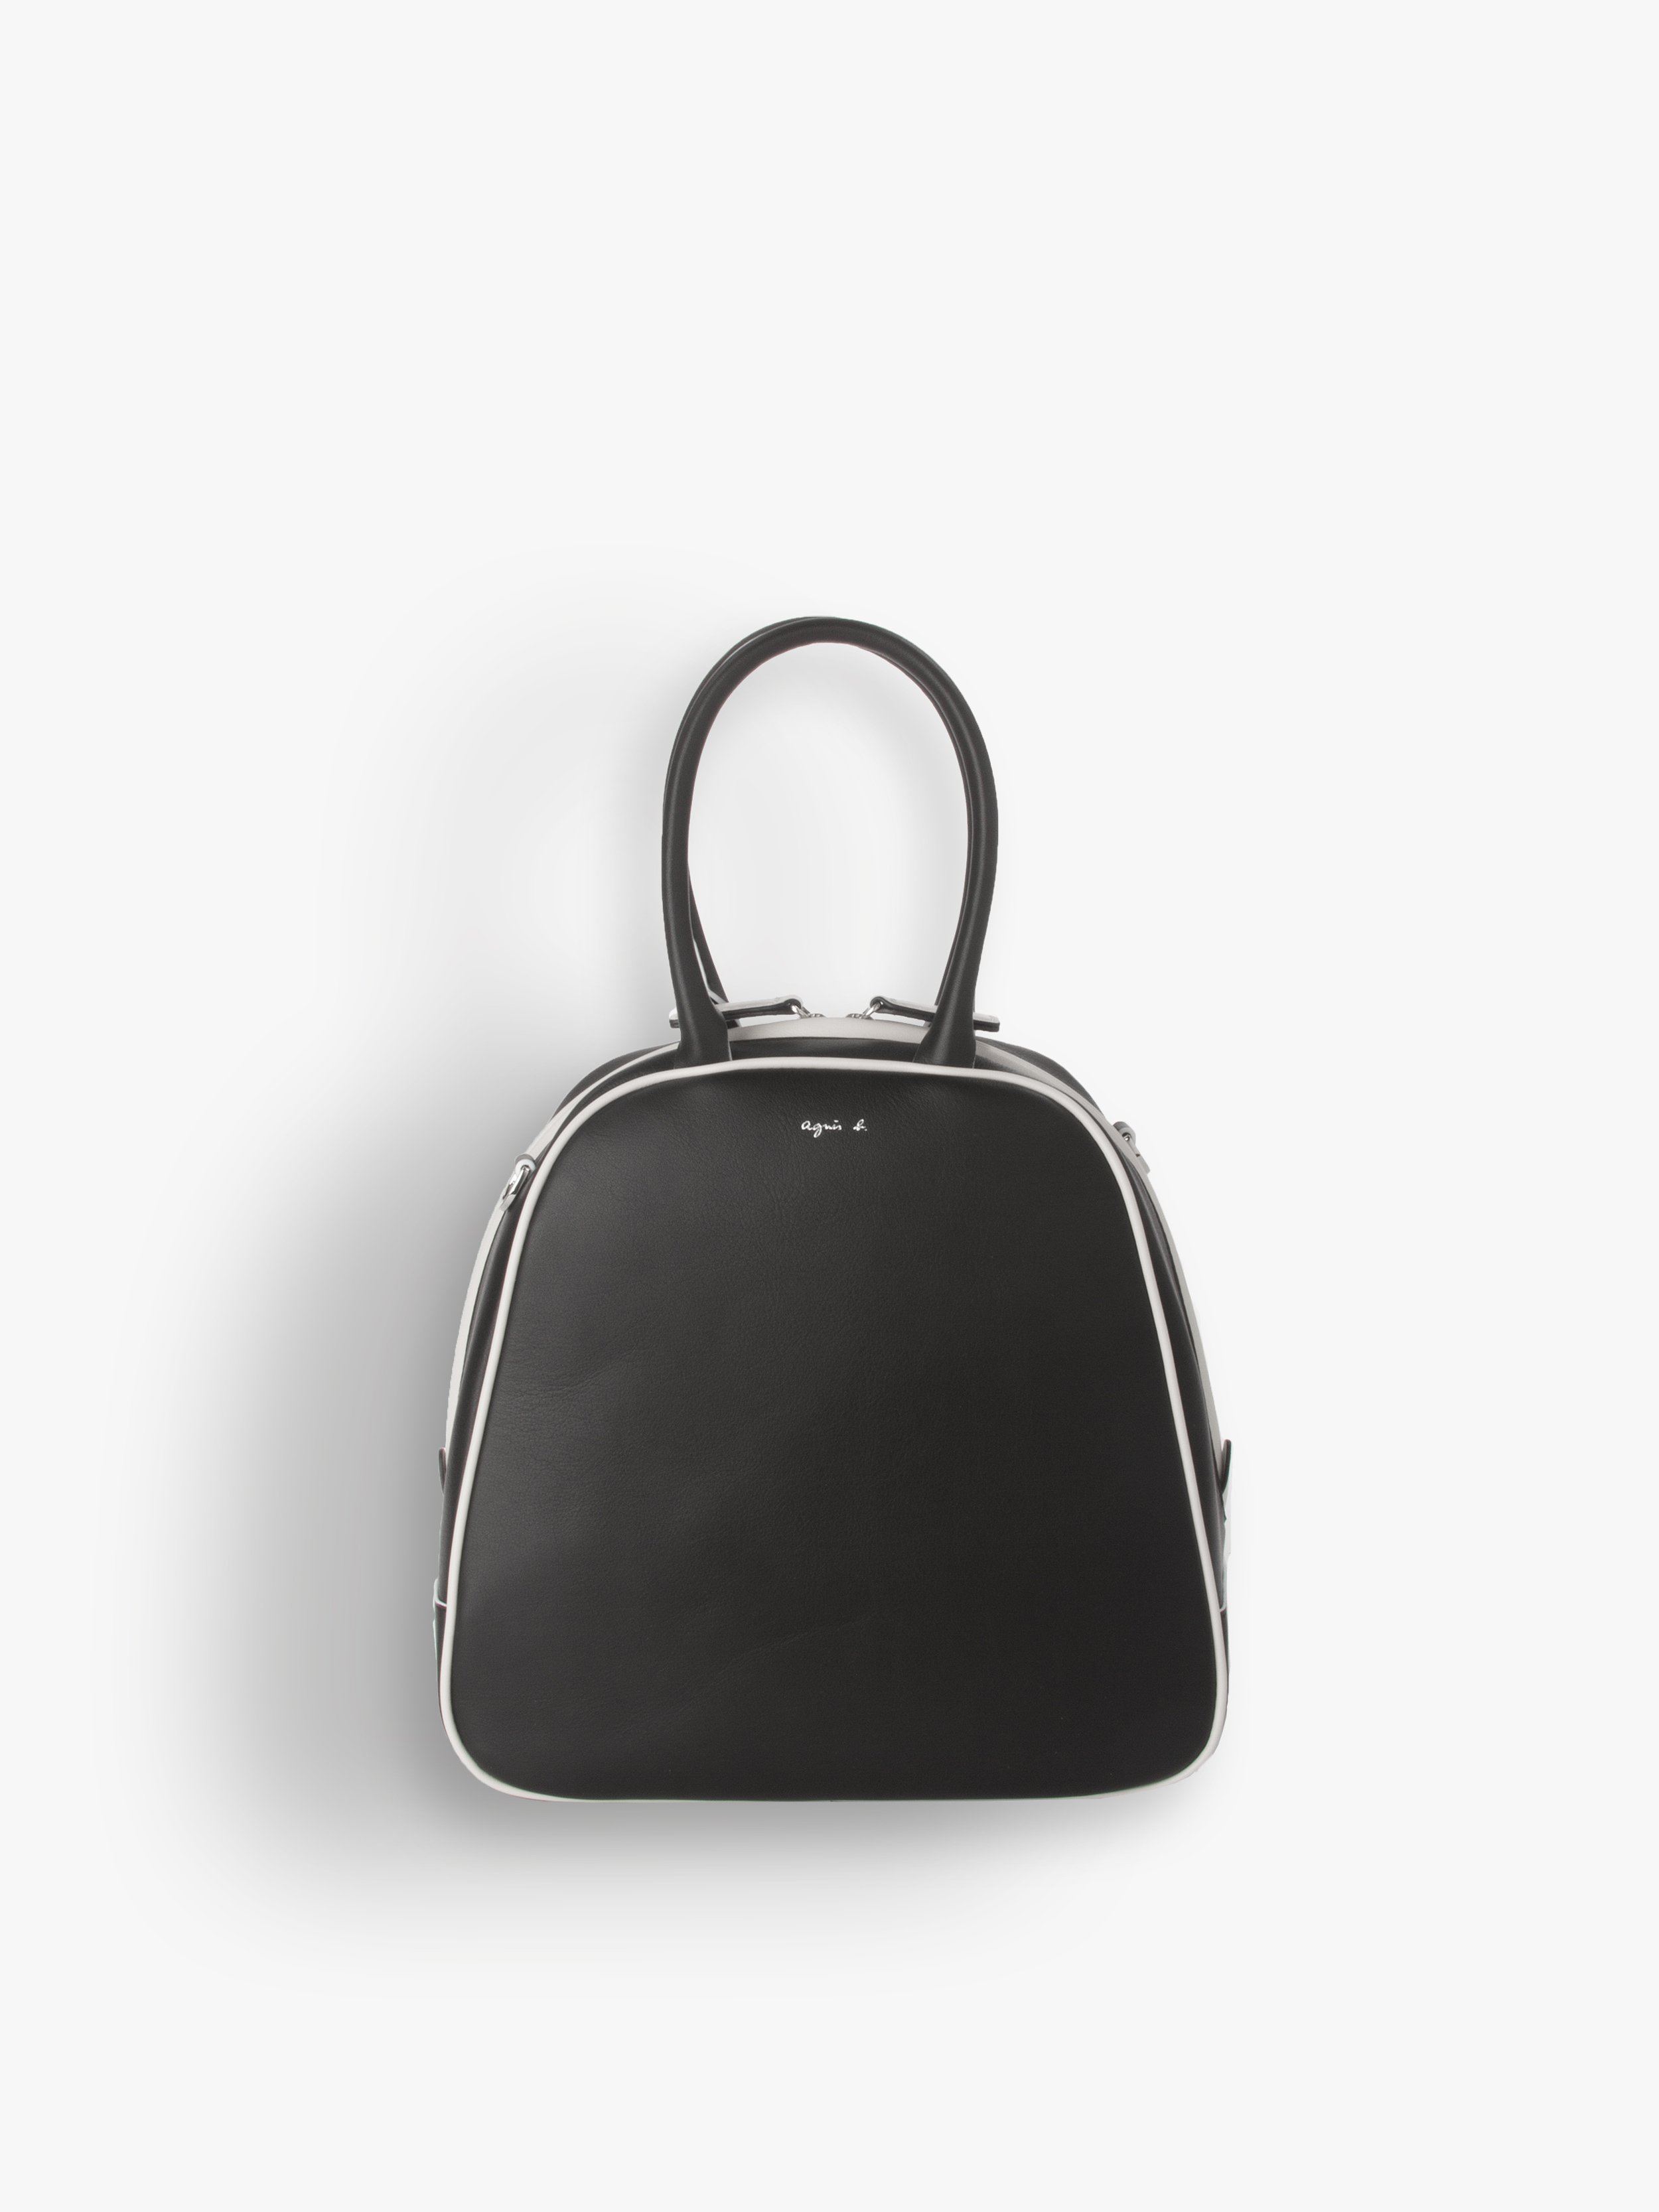 black leather suzy small handbag | agnès b.